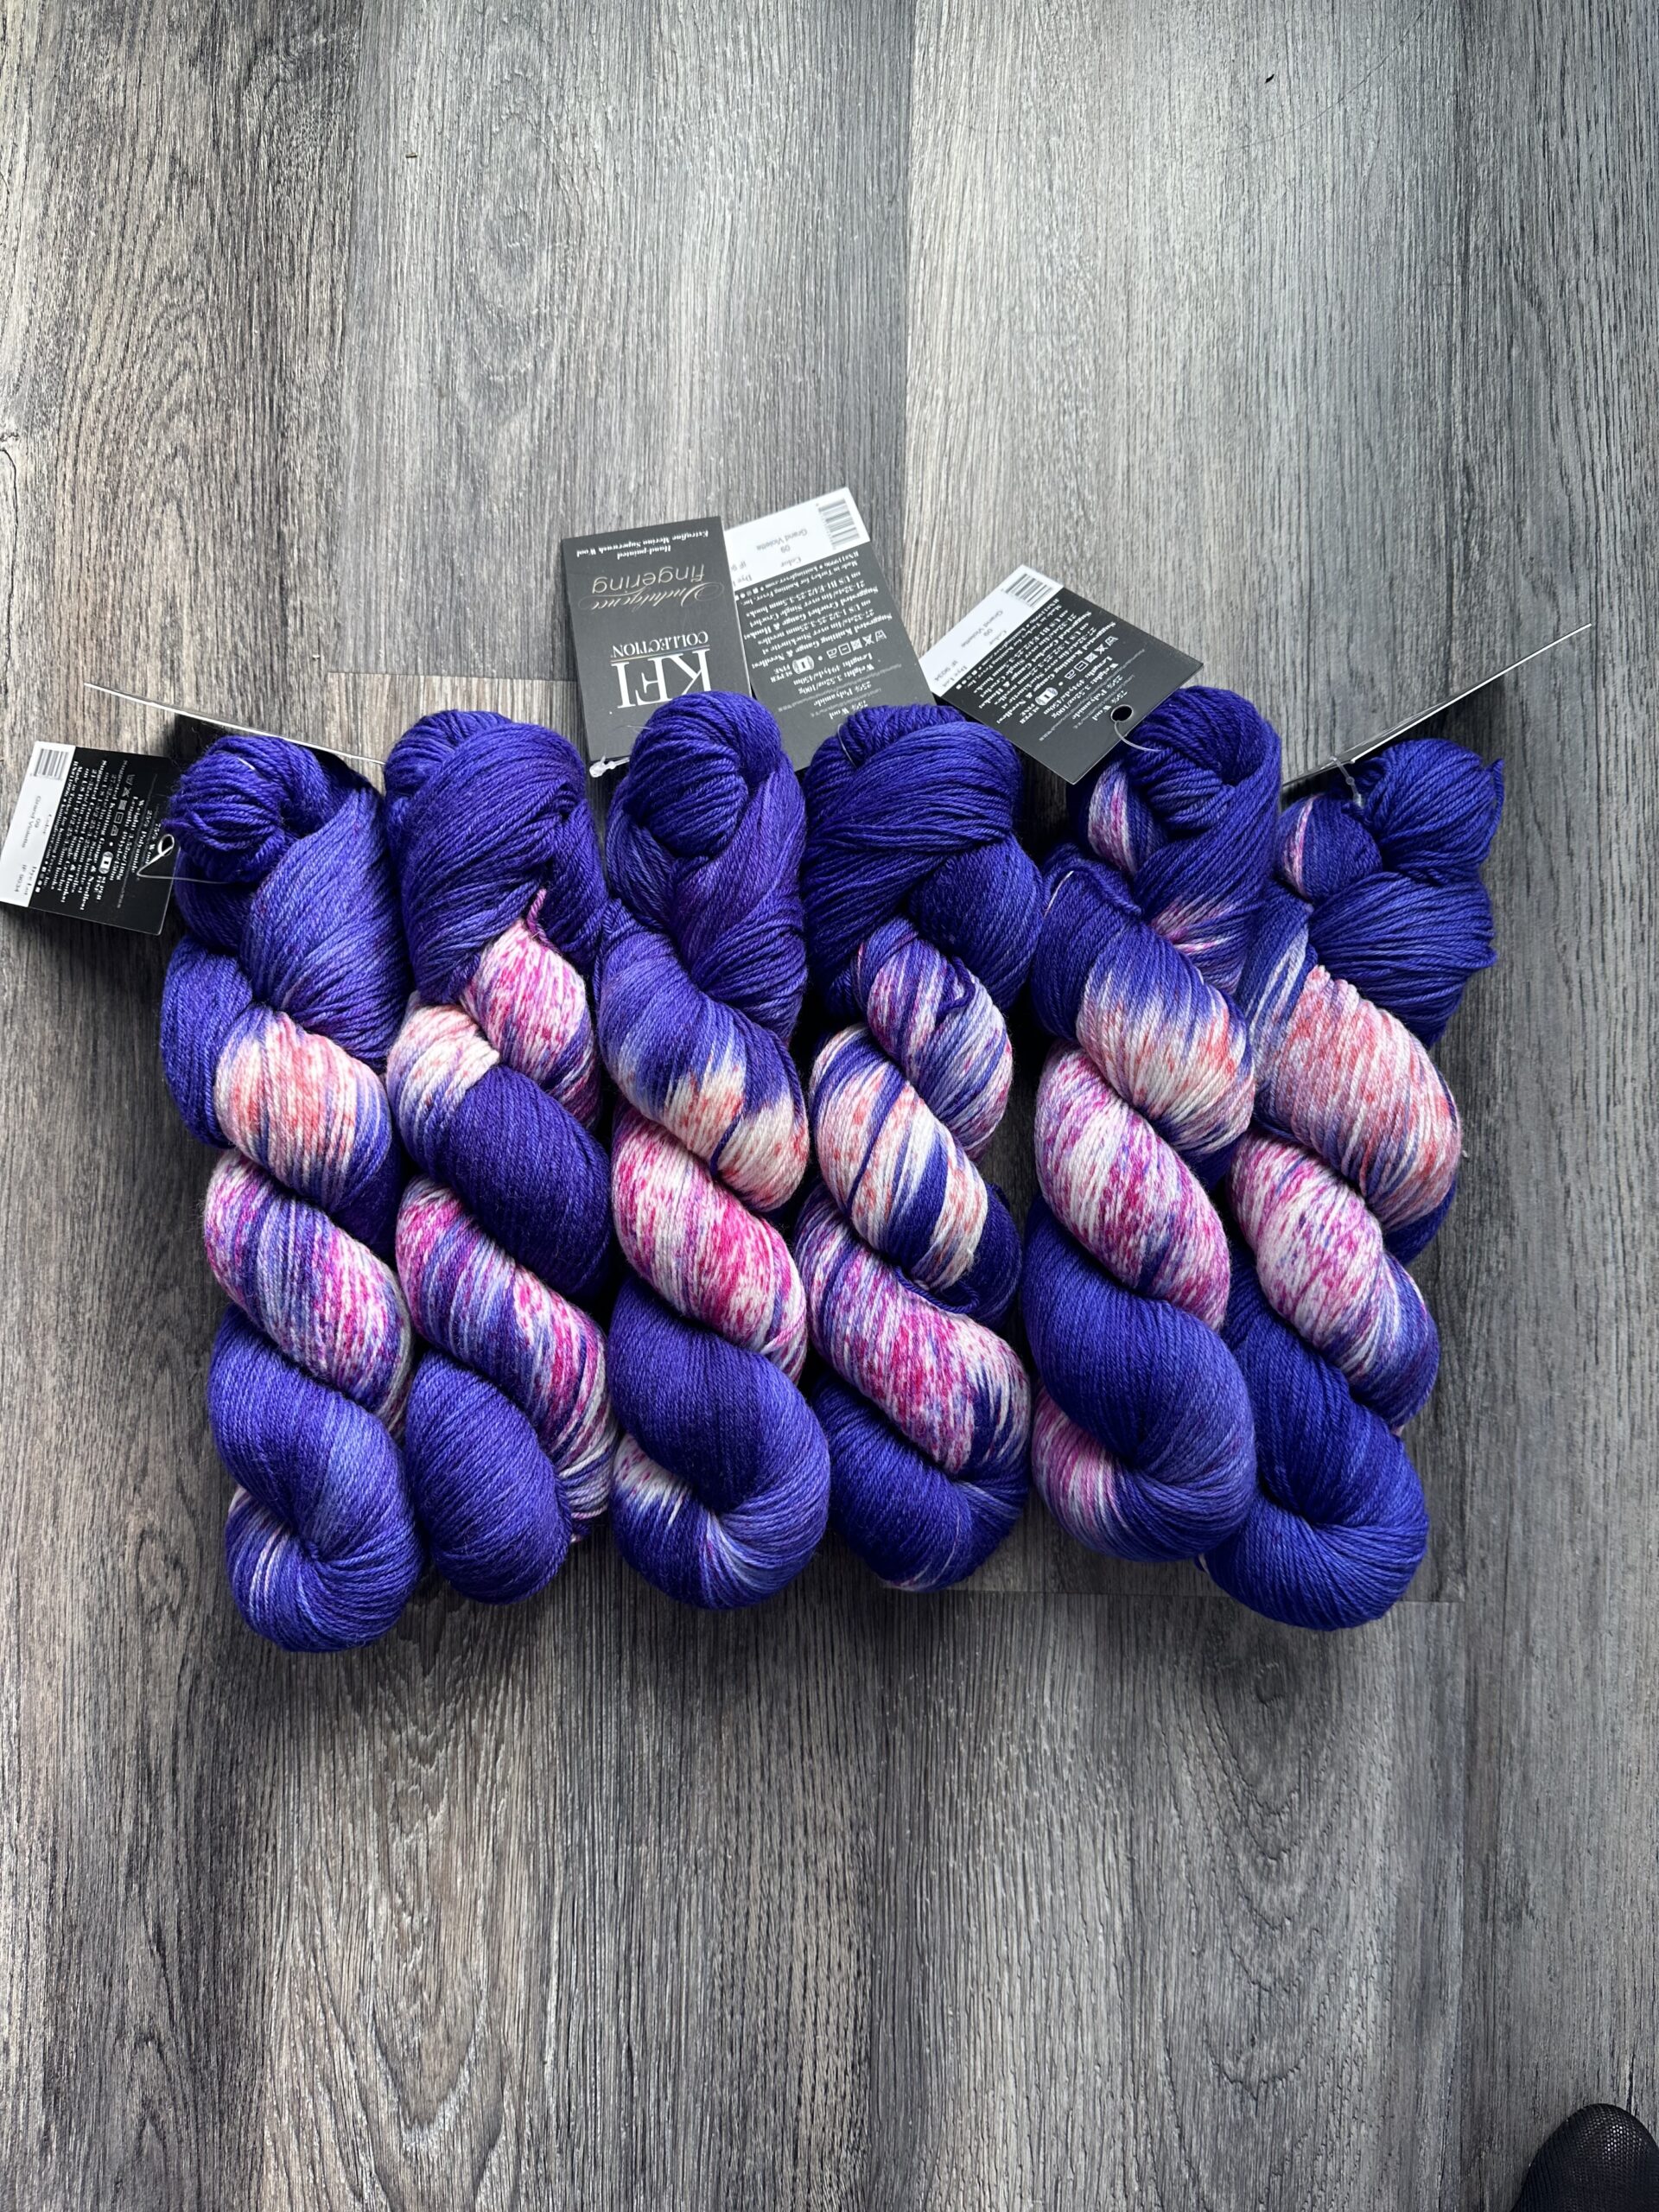 Misty Pines Hand-Dyed Sock Yarn Kit - Pattern